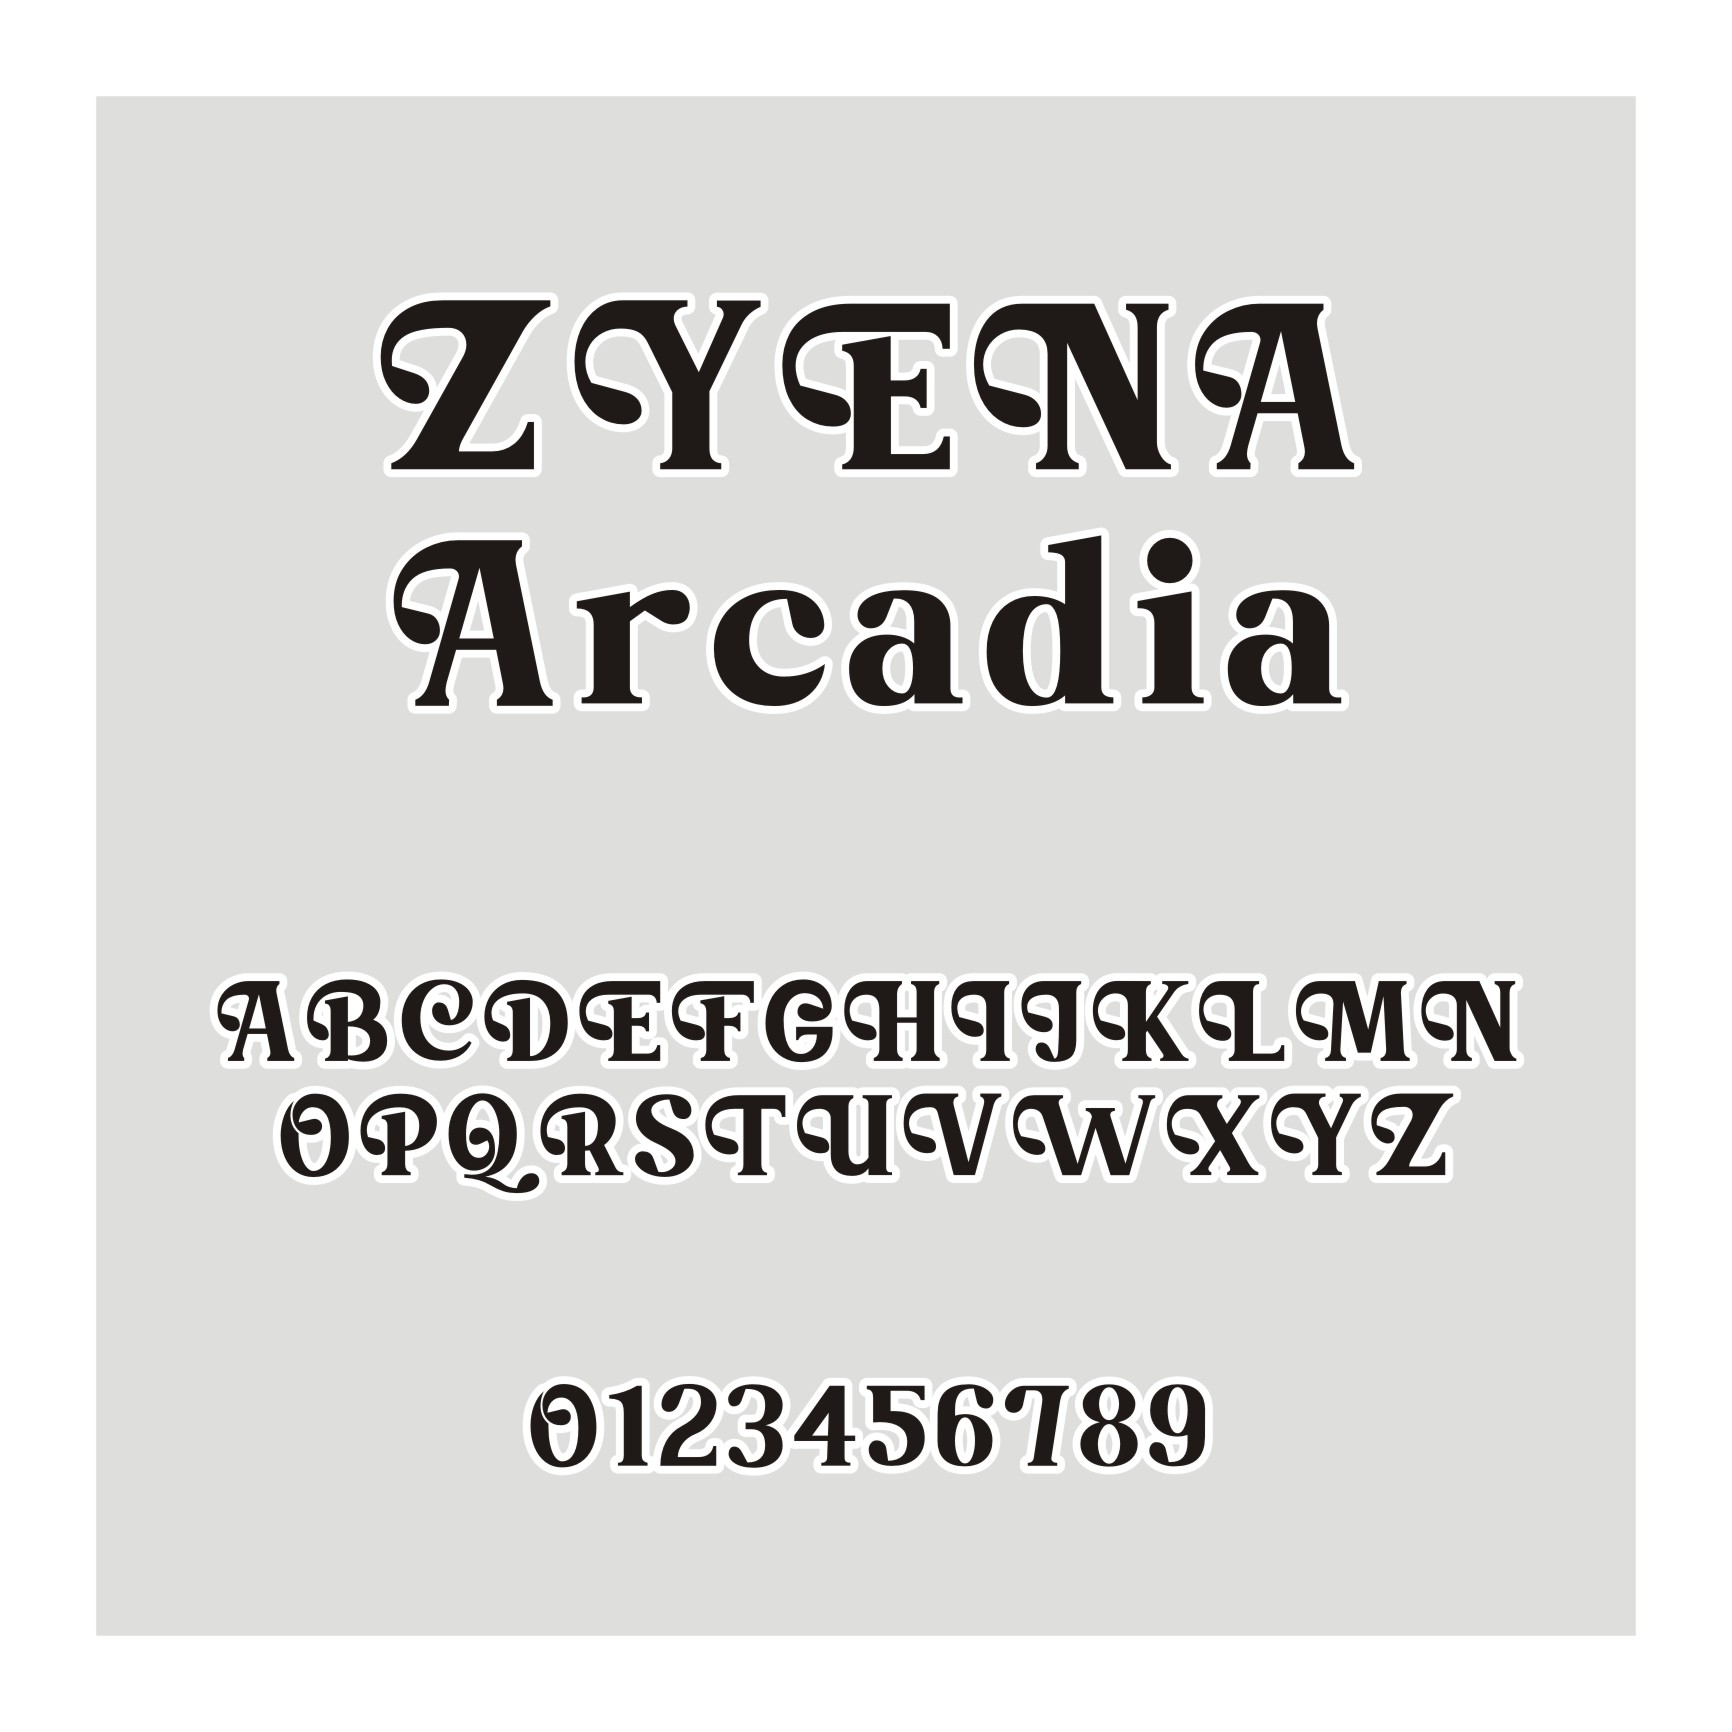 ZYENA Arcadia